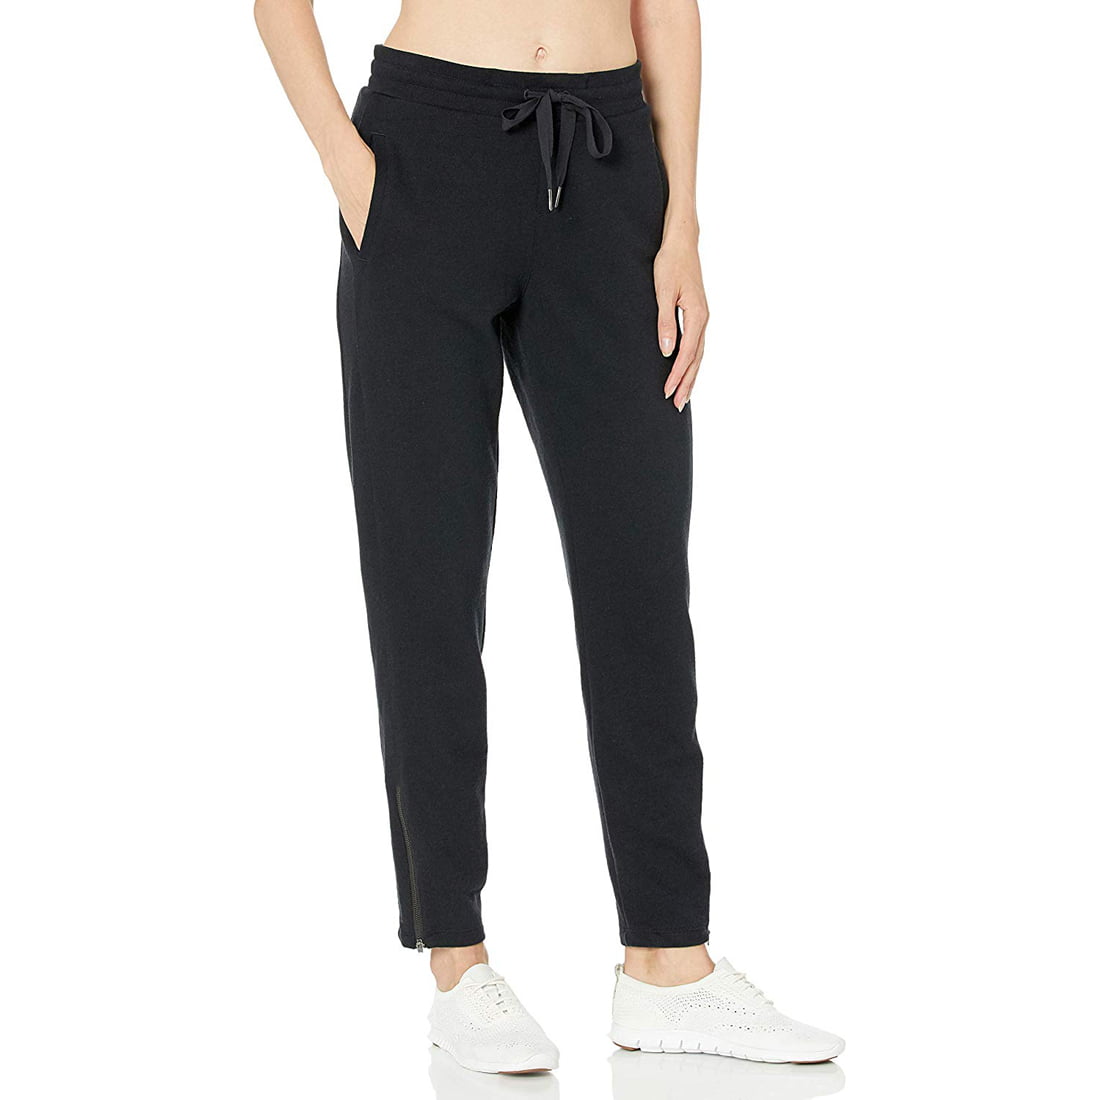 Lole Women's Felicia Pants, Black,Small - Walmart.com